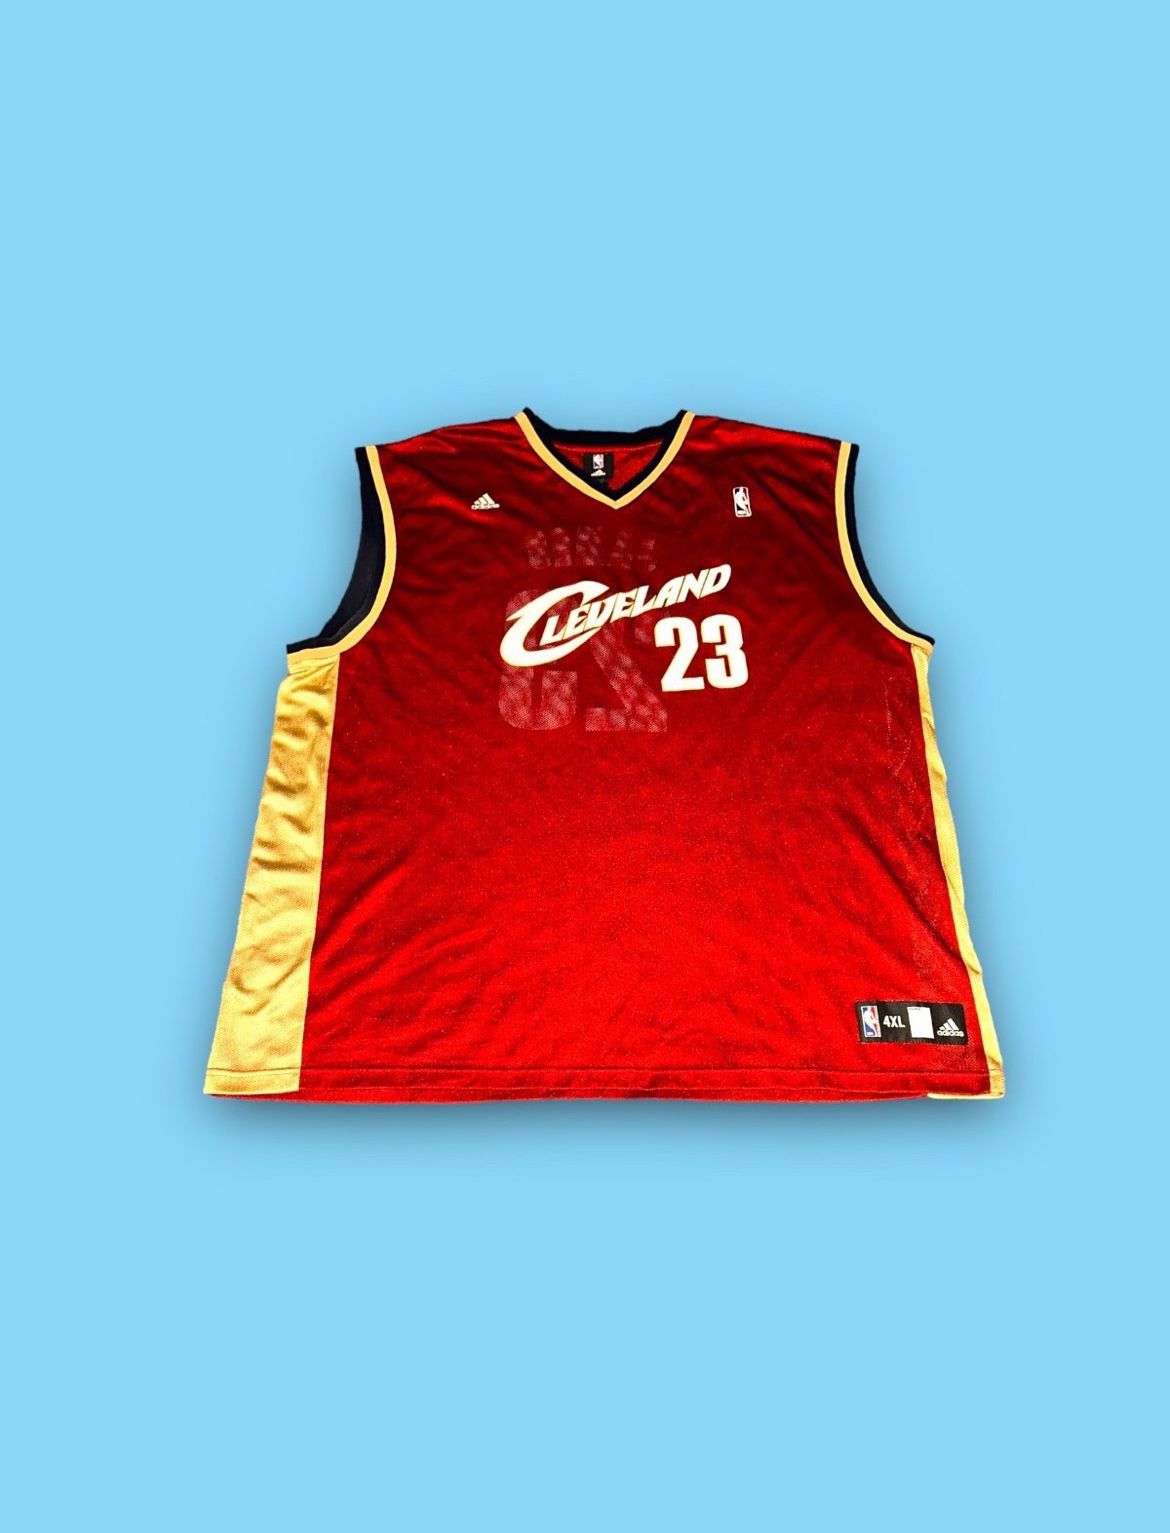 Vintage Cleveland Cavaliers Lebron James adidas jersey